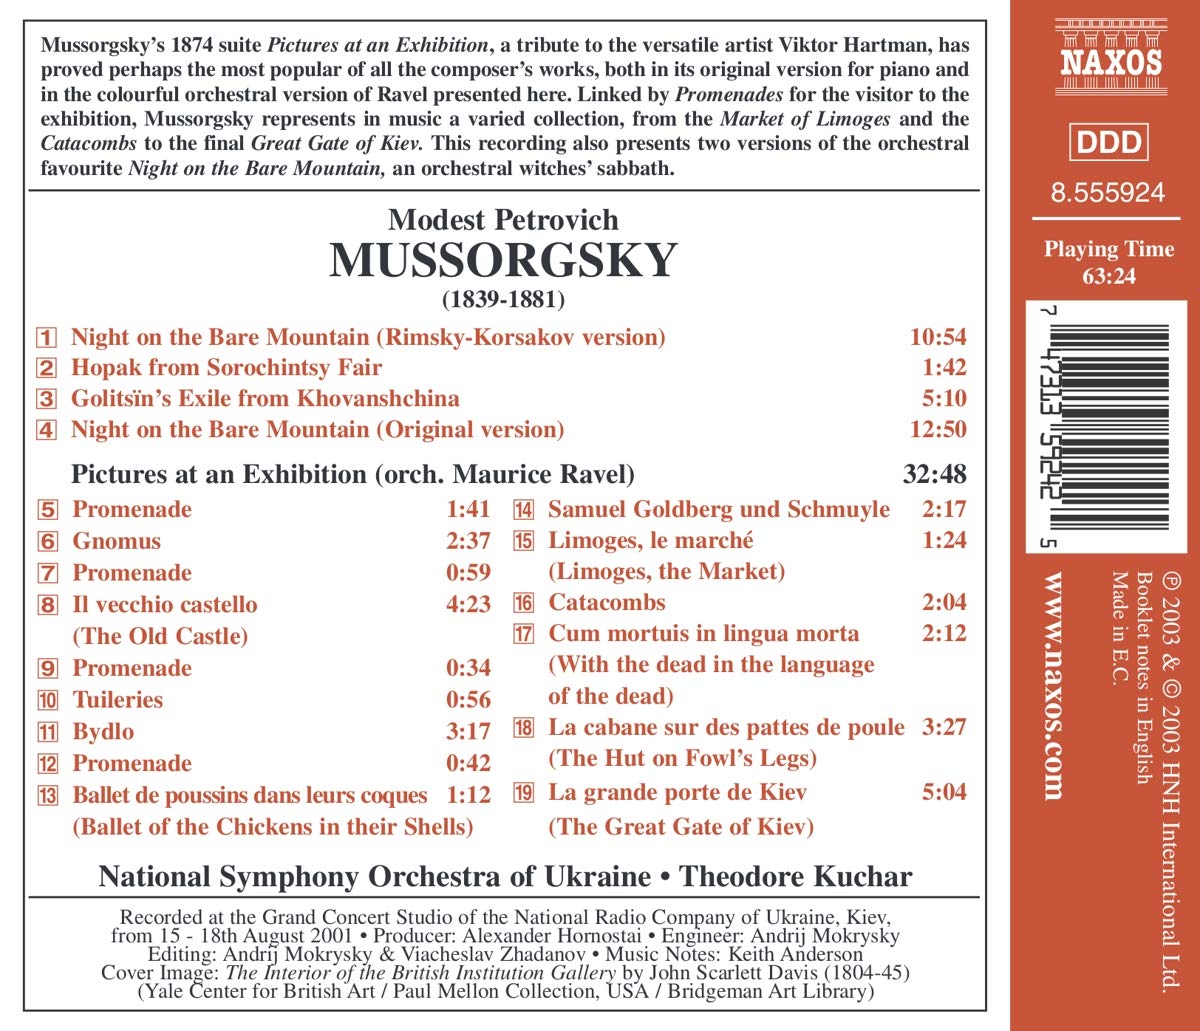 Theodor Kuchar 무소르그스키: 전람회의 그림 (Mussorgsky : Pictures at an Exhibition) 